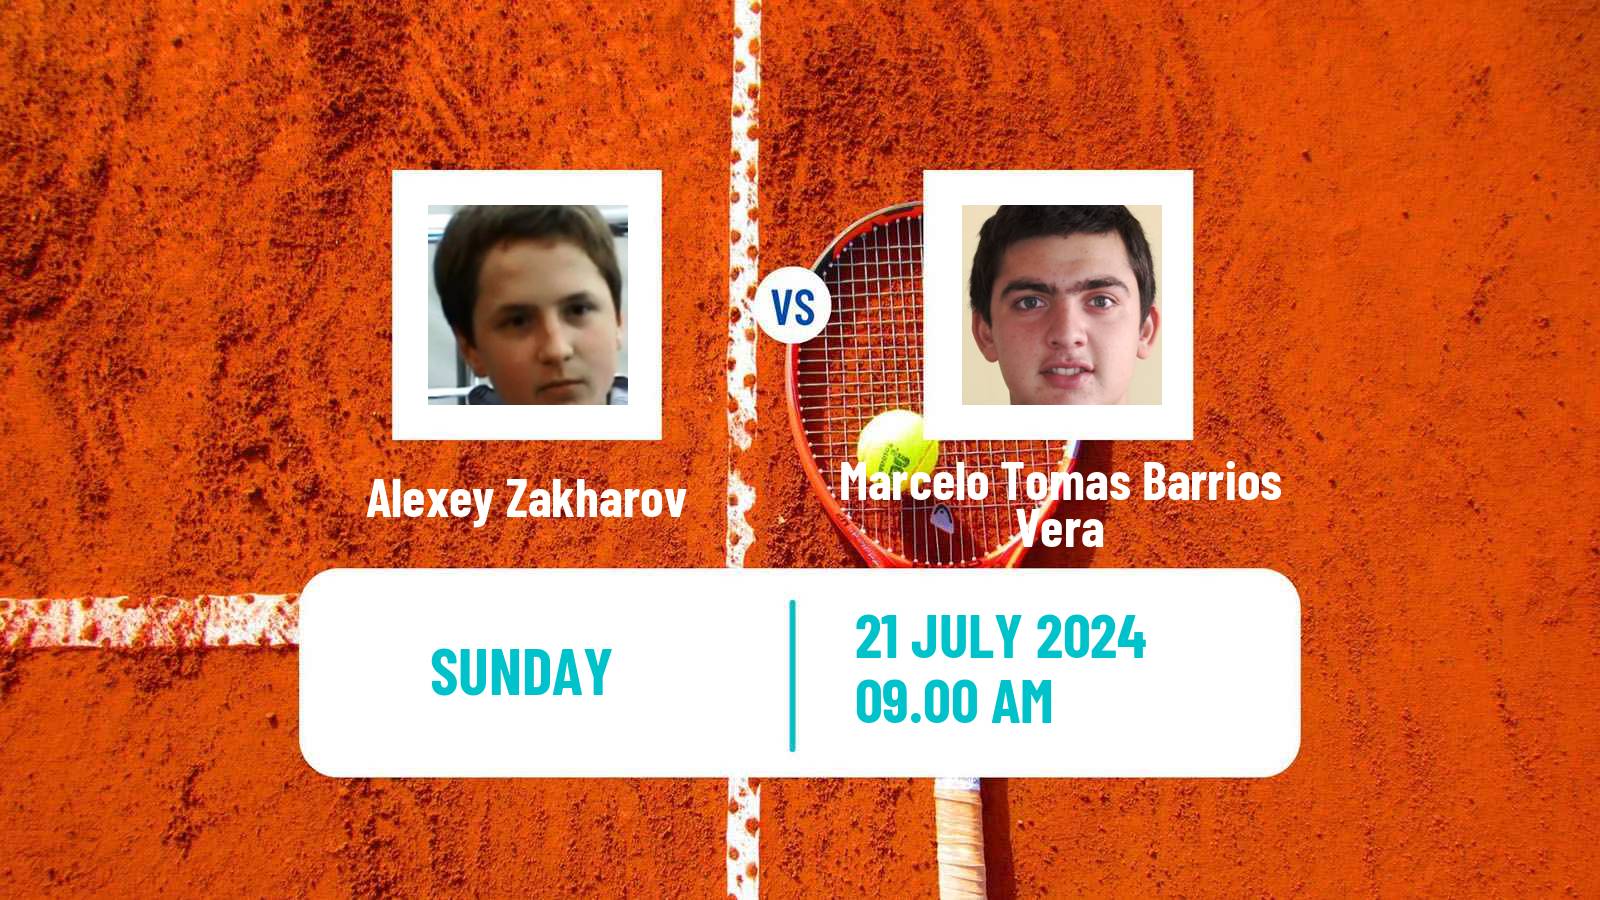 Tennis Amersfoort Challenger Men Alexey Zakharov - Marcelo Tomas Barrios Vera